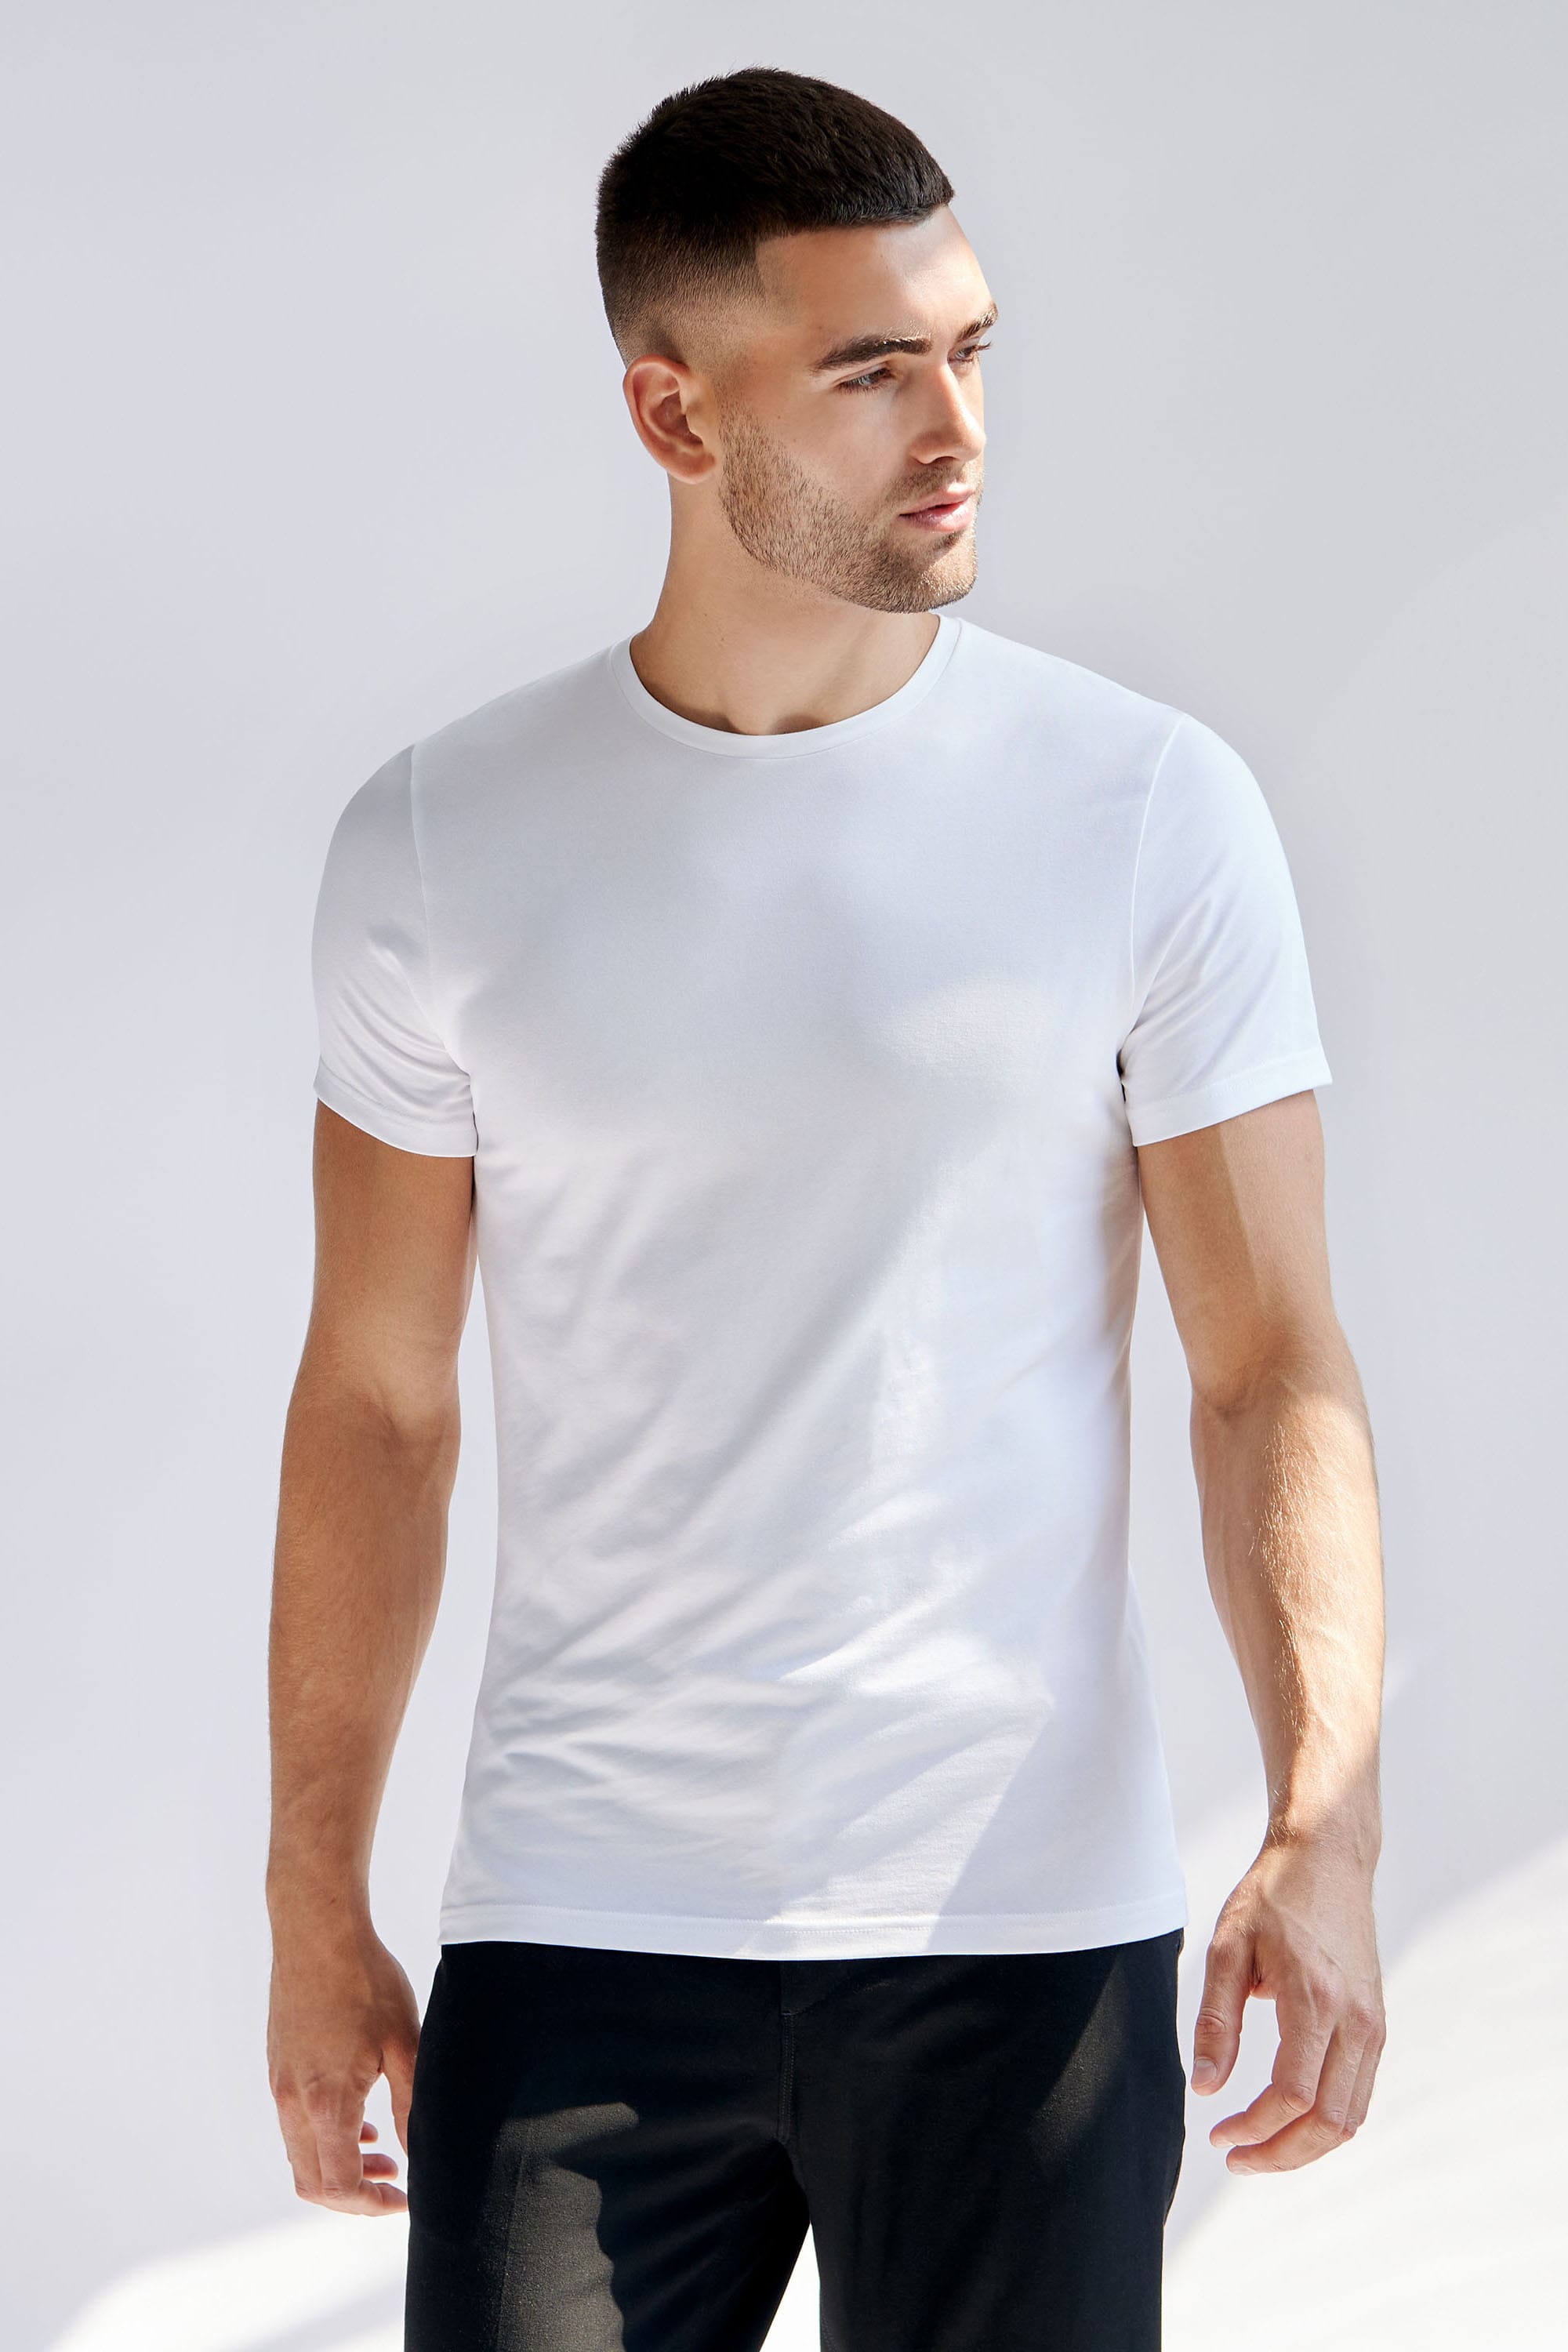 Men's White T-shirt 2 pack - Round neck, made of organic cotton